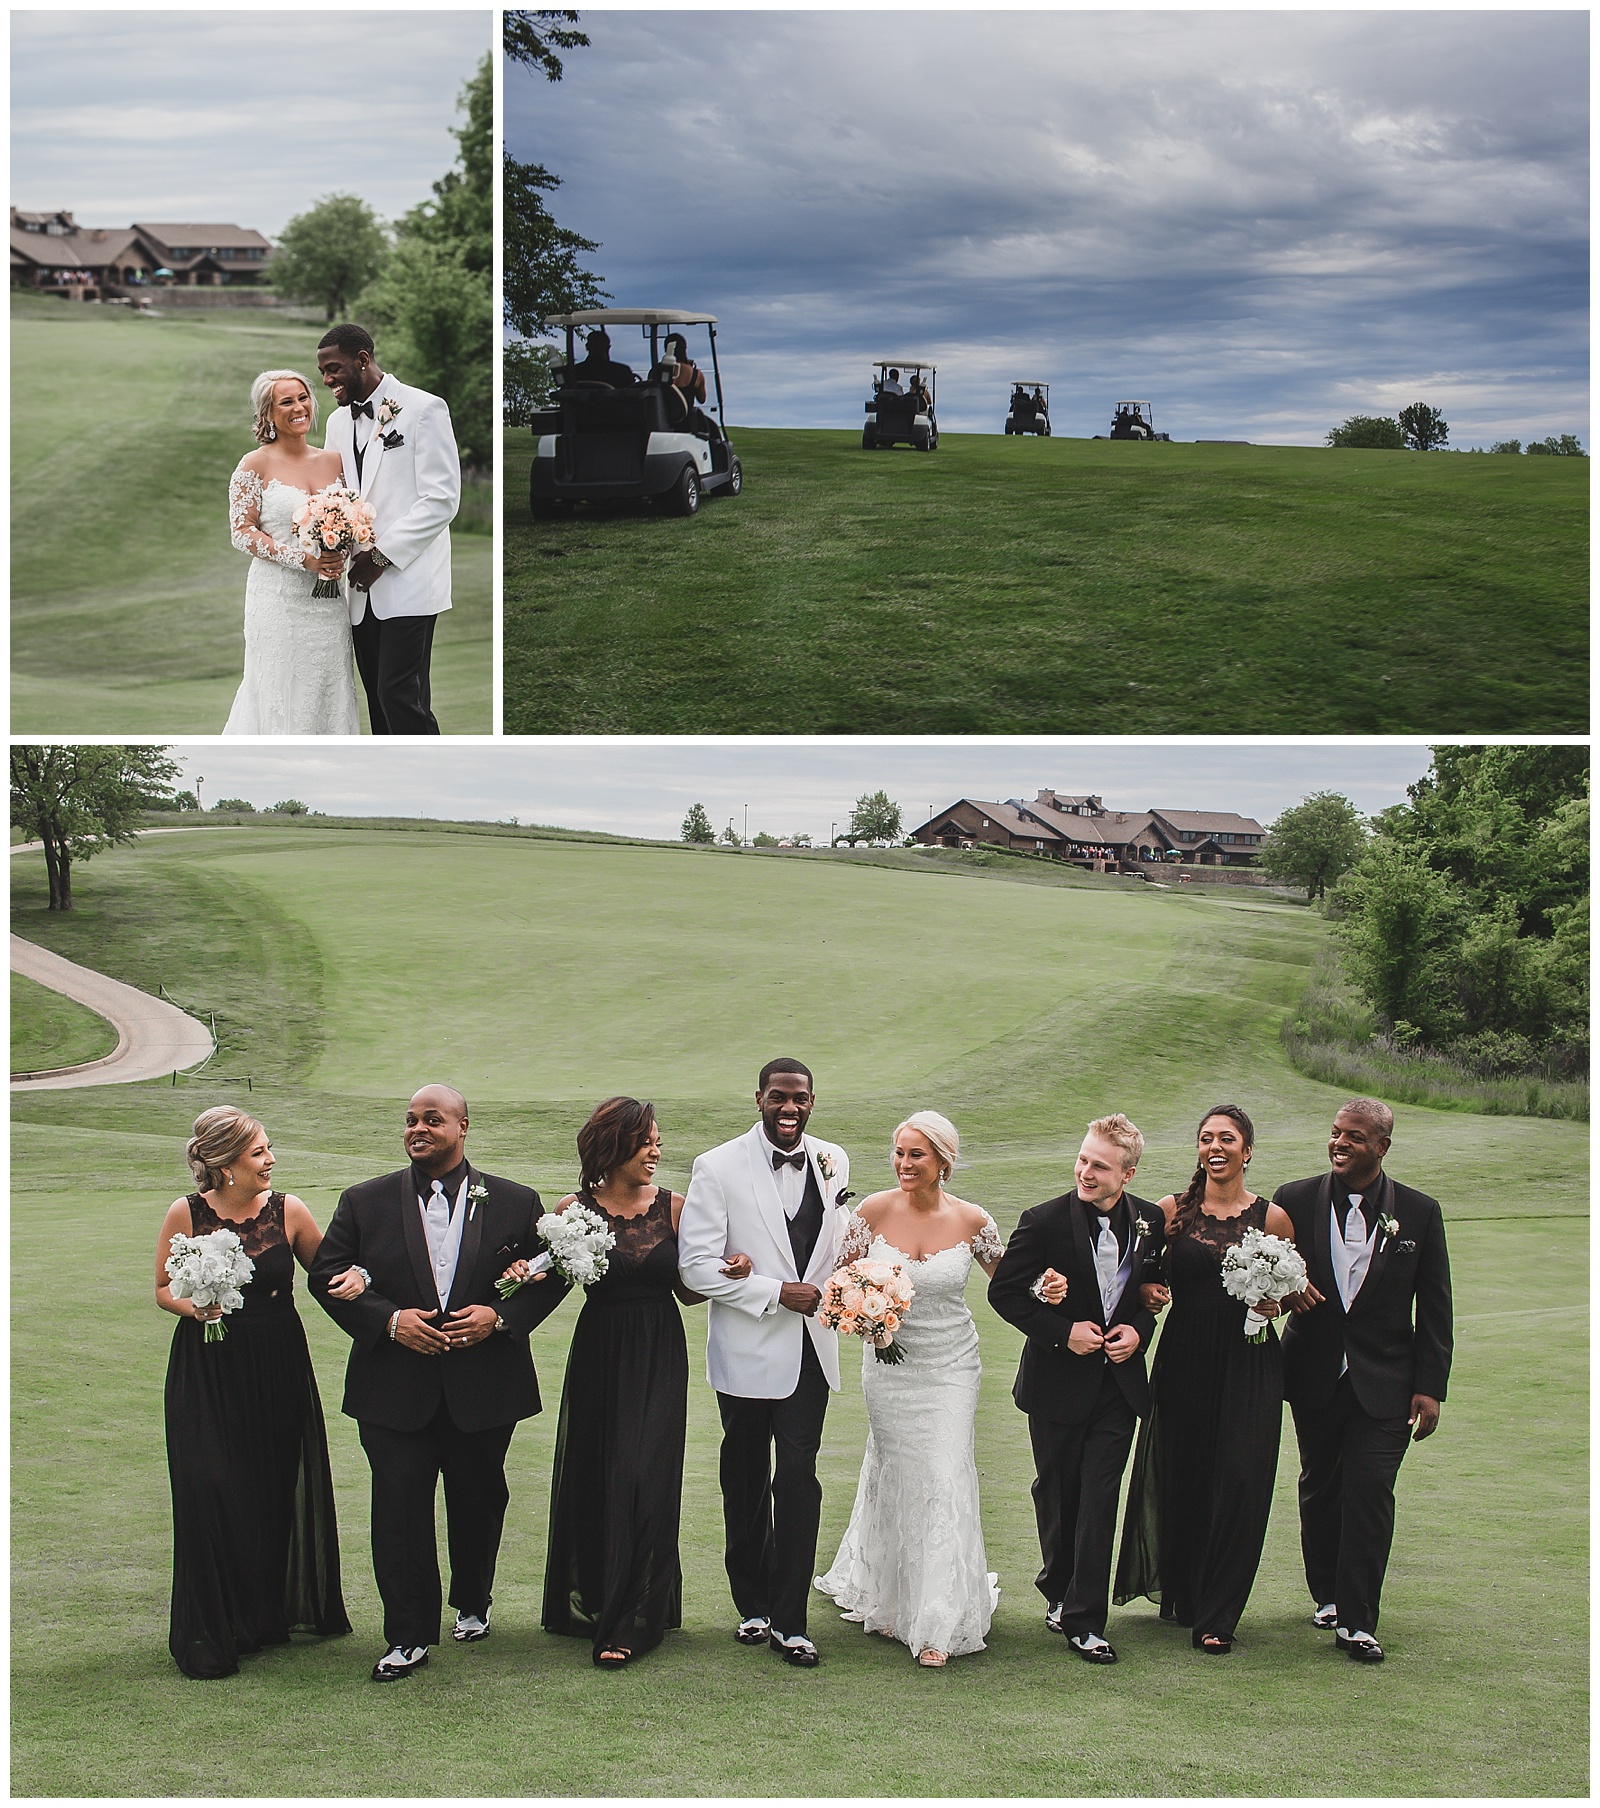 Wedding photography at Staley Farms Golf Club in Kansas City.